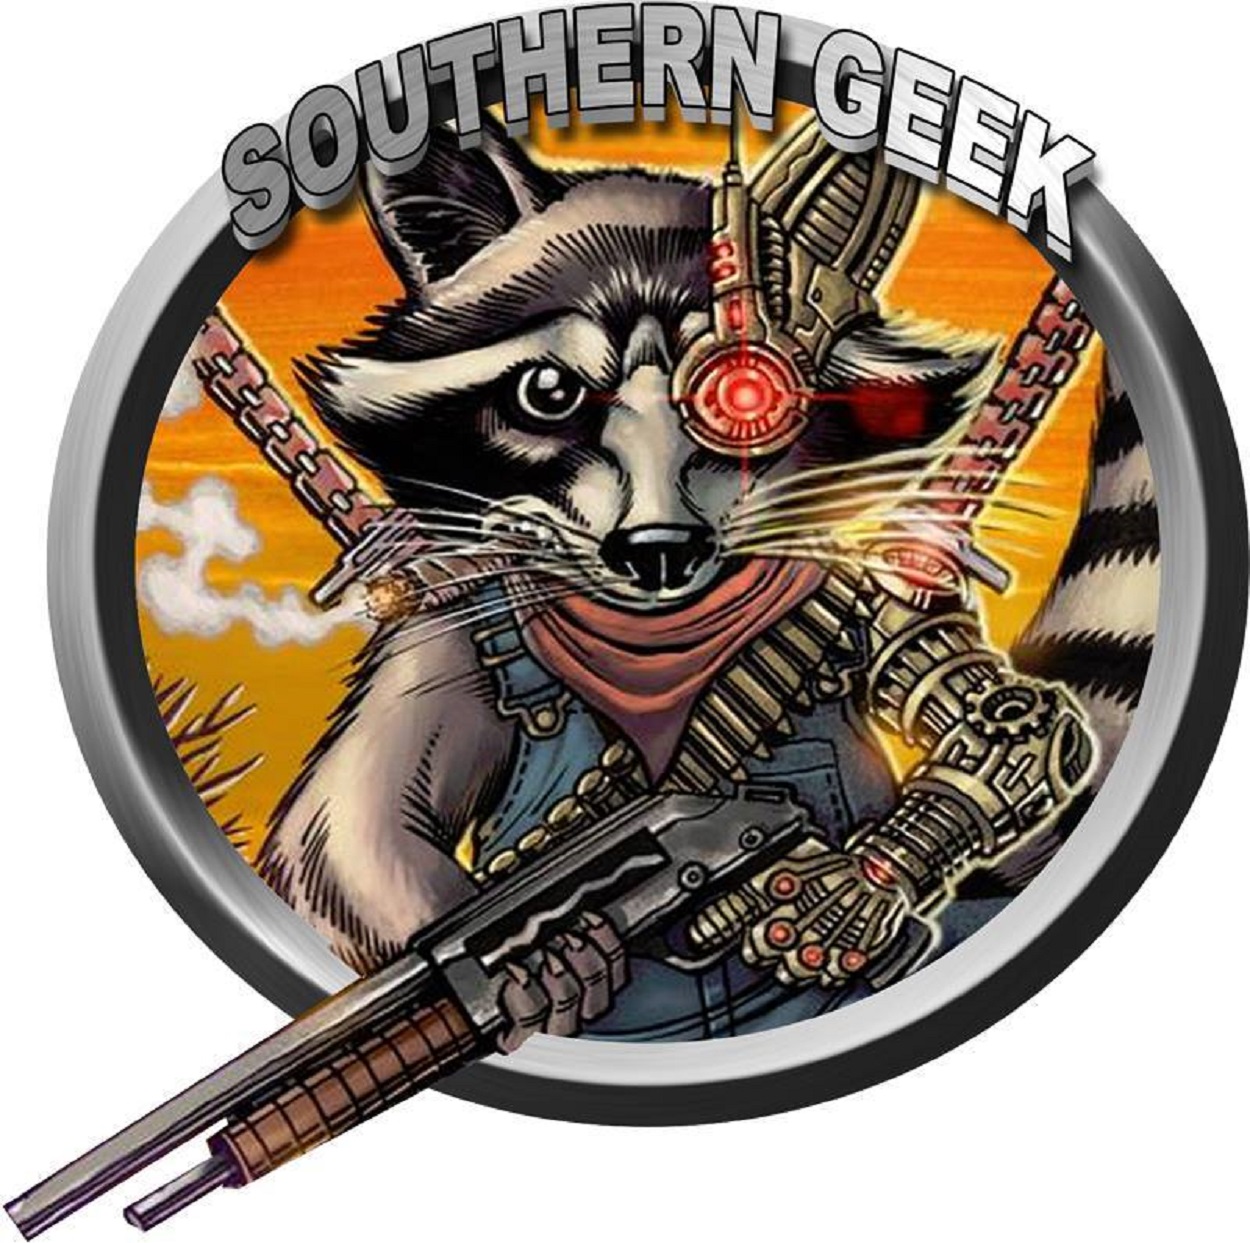 Southern Geek-Fest logo